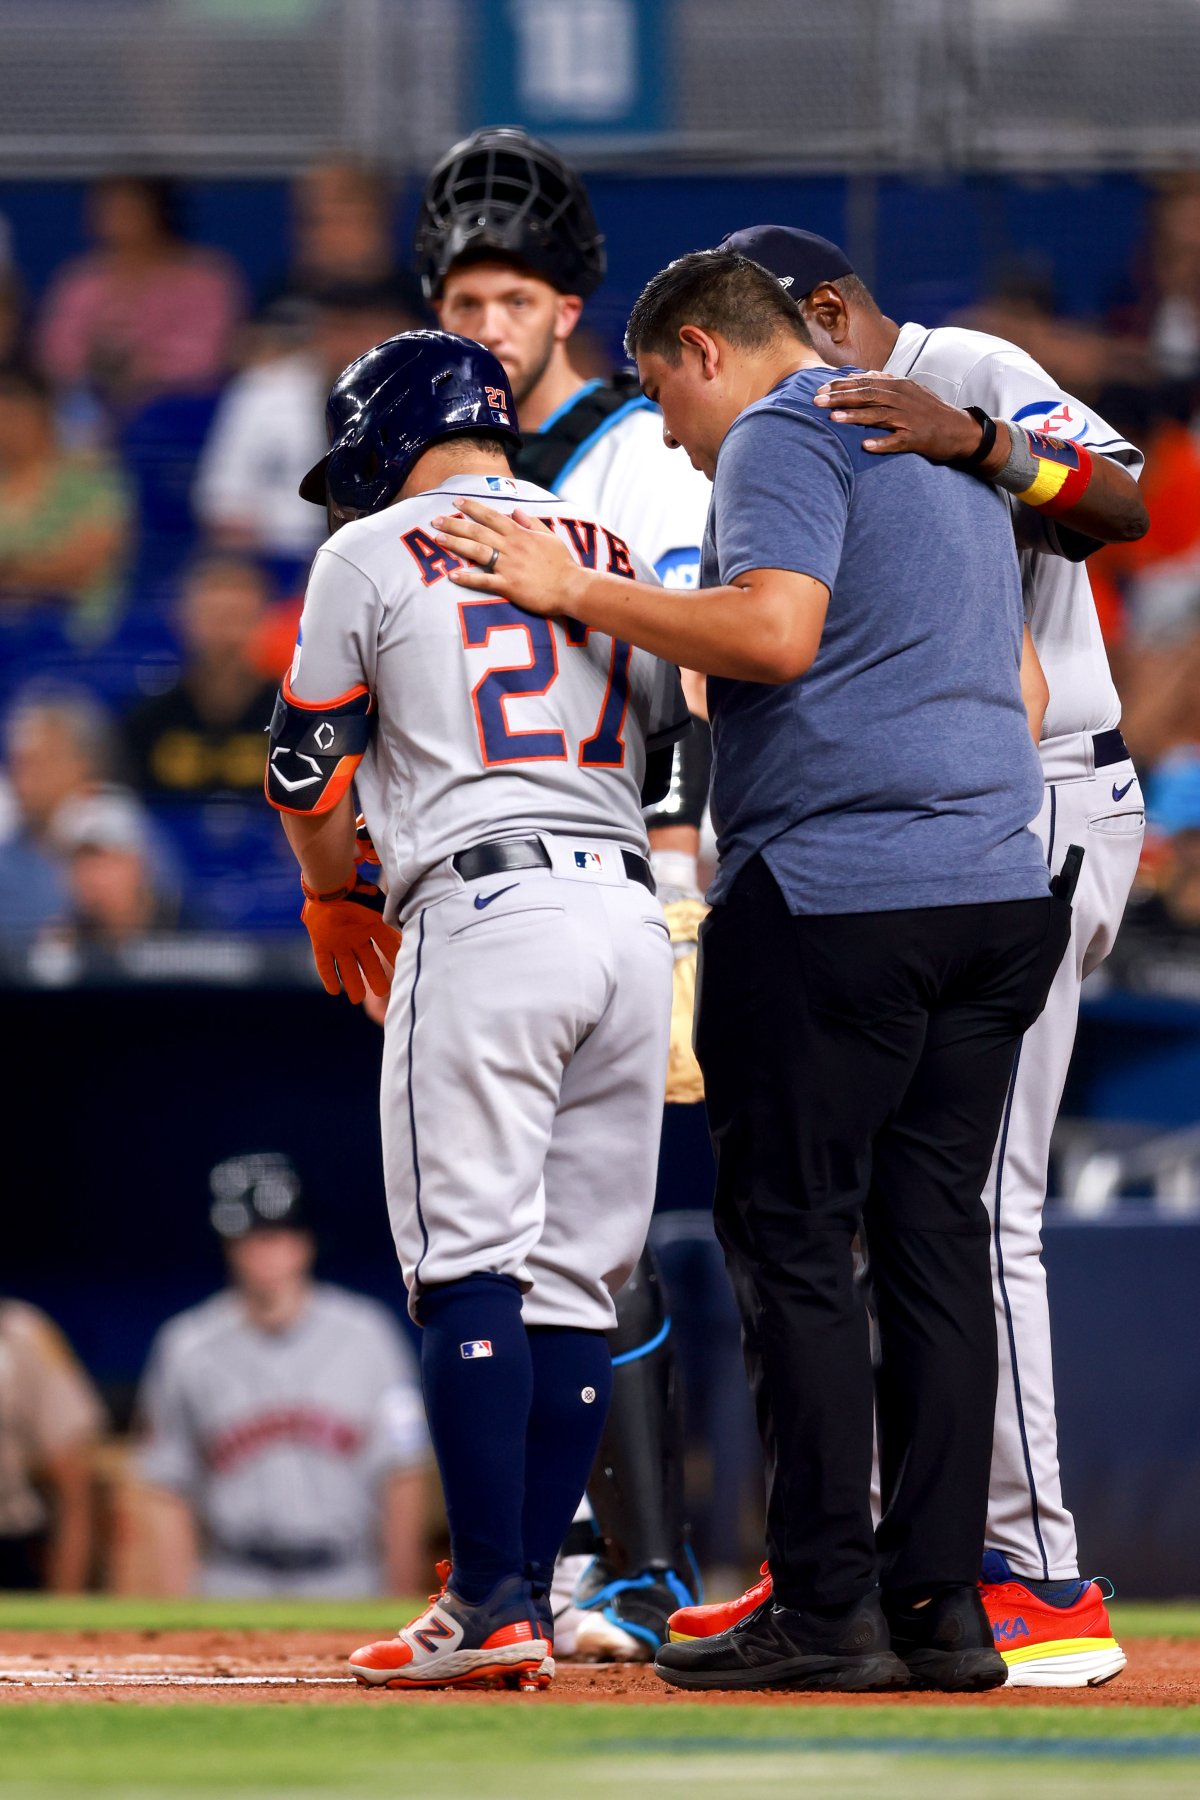 Astros' José Altuve's Height Mocked in New Photo Next to Yordan Alvarez